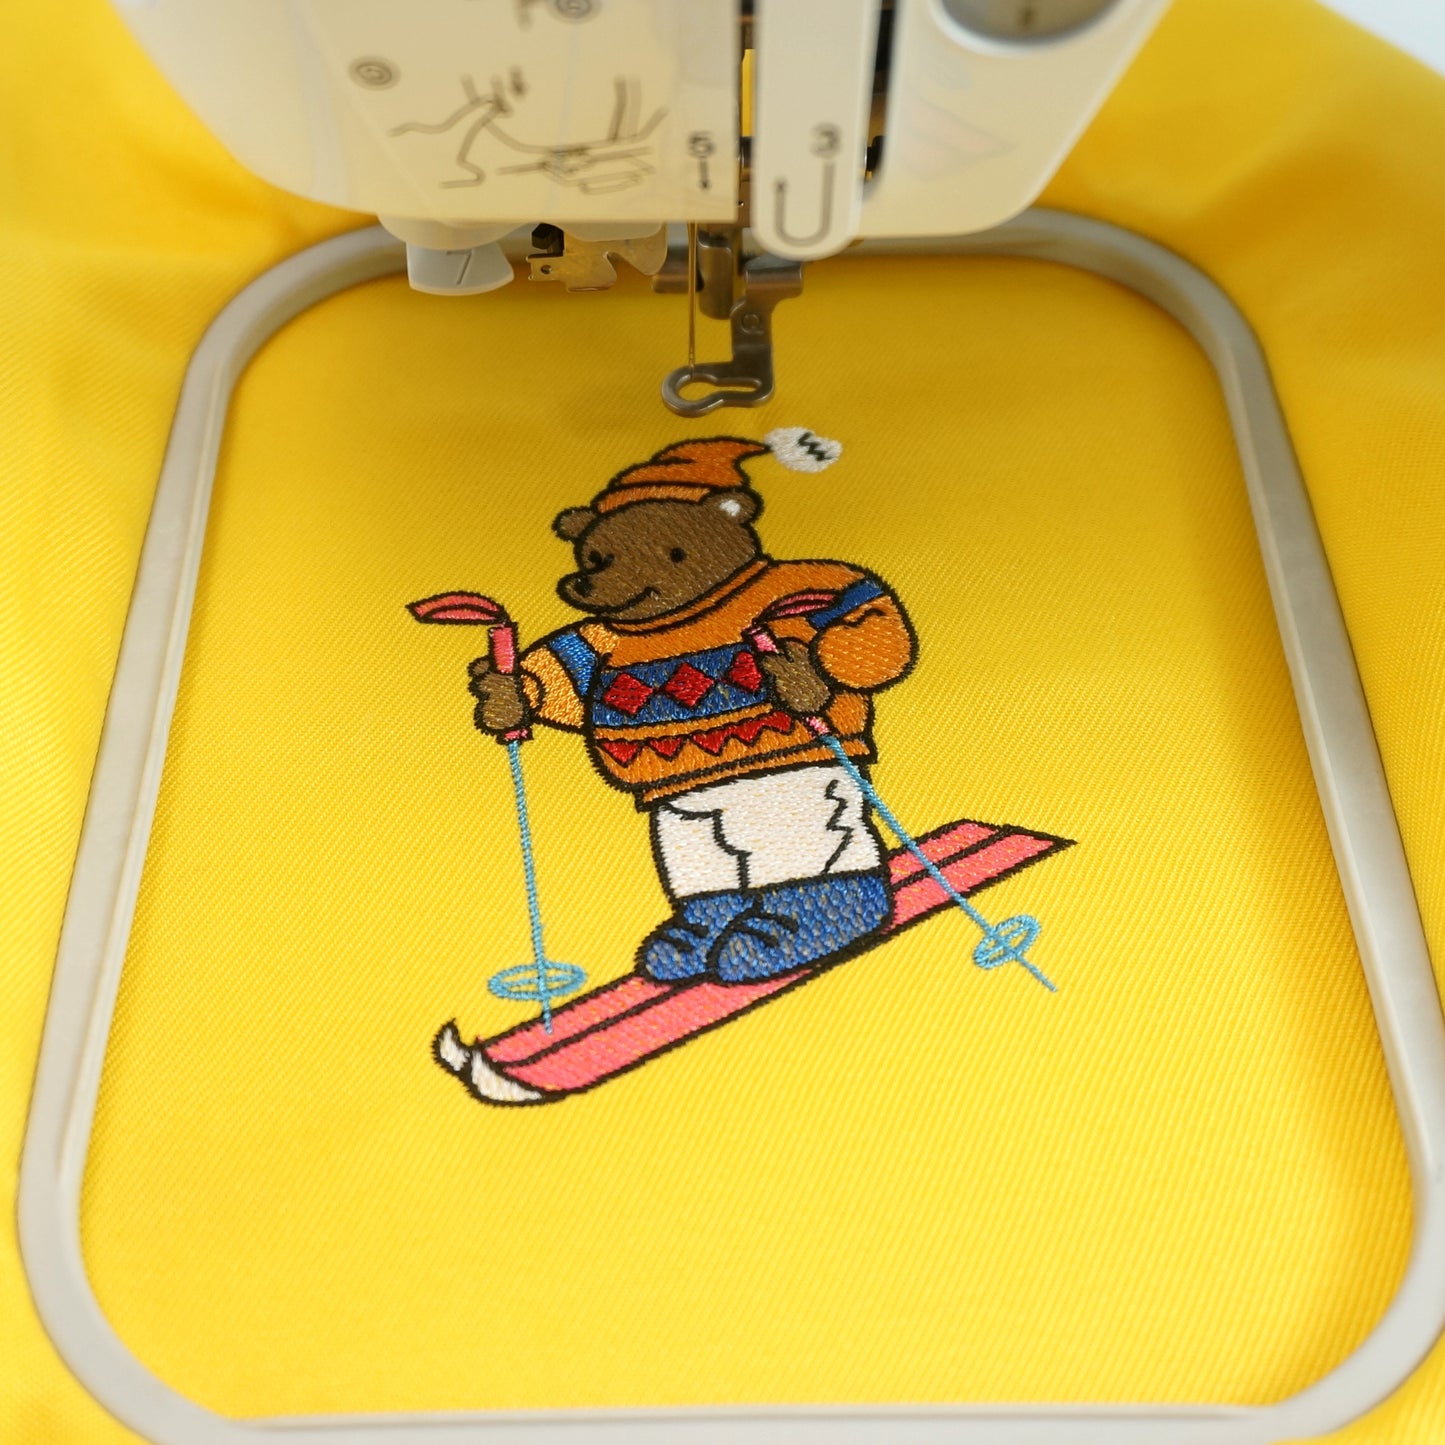 New brothread Cut Away Machine Embroidery Stabilizer Backing 15" x 25 Yd roll - Medium Weight 2.5 Ounce